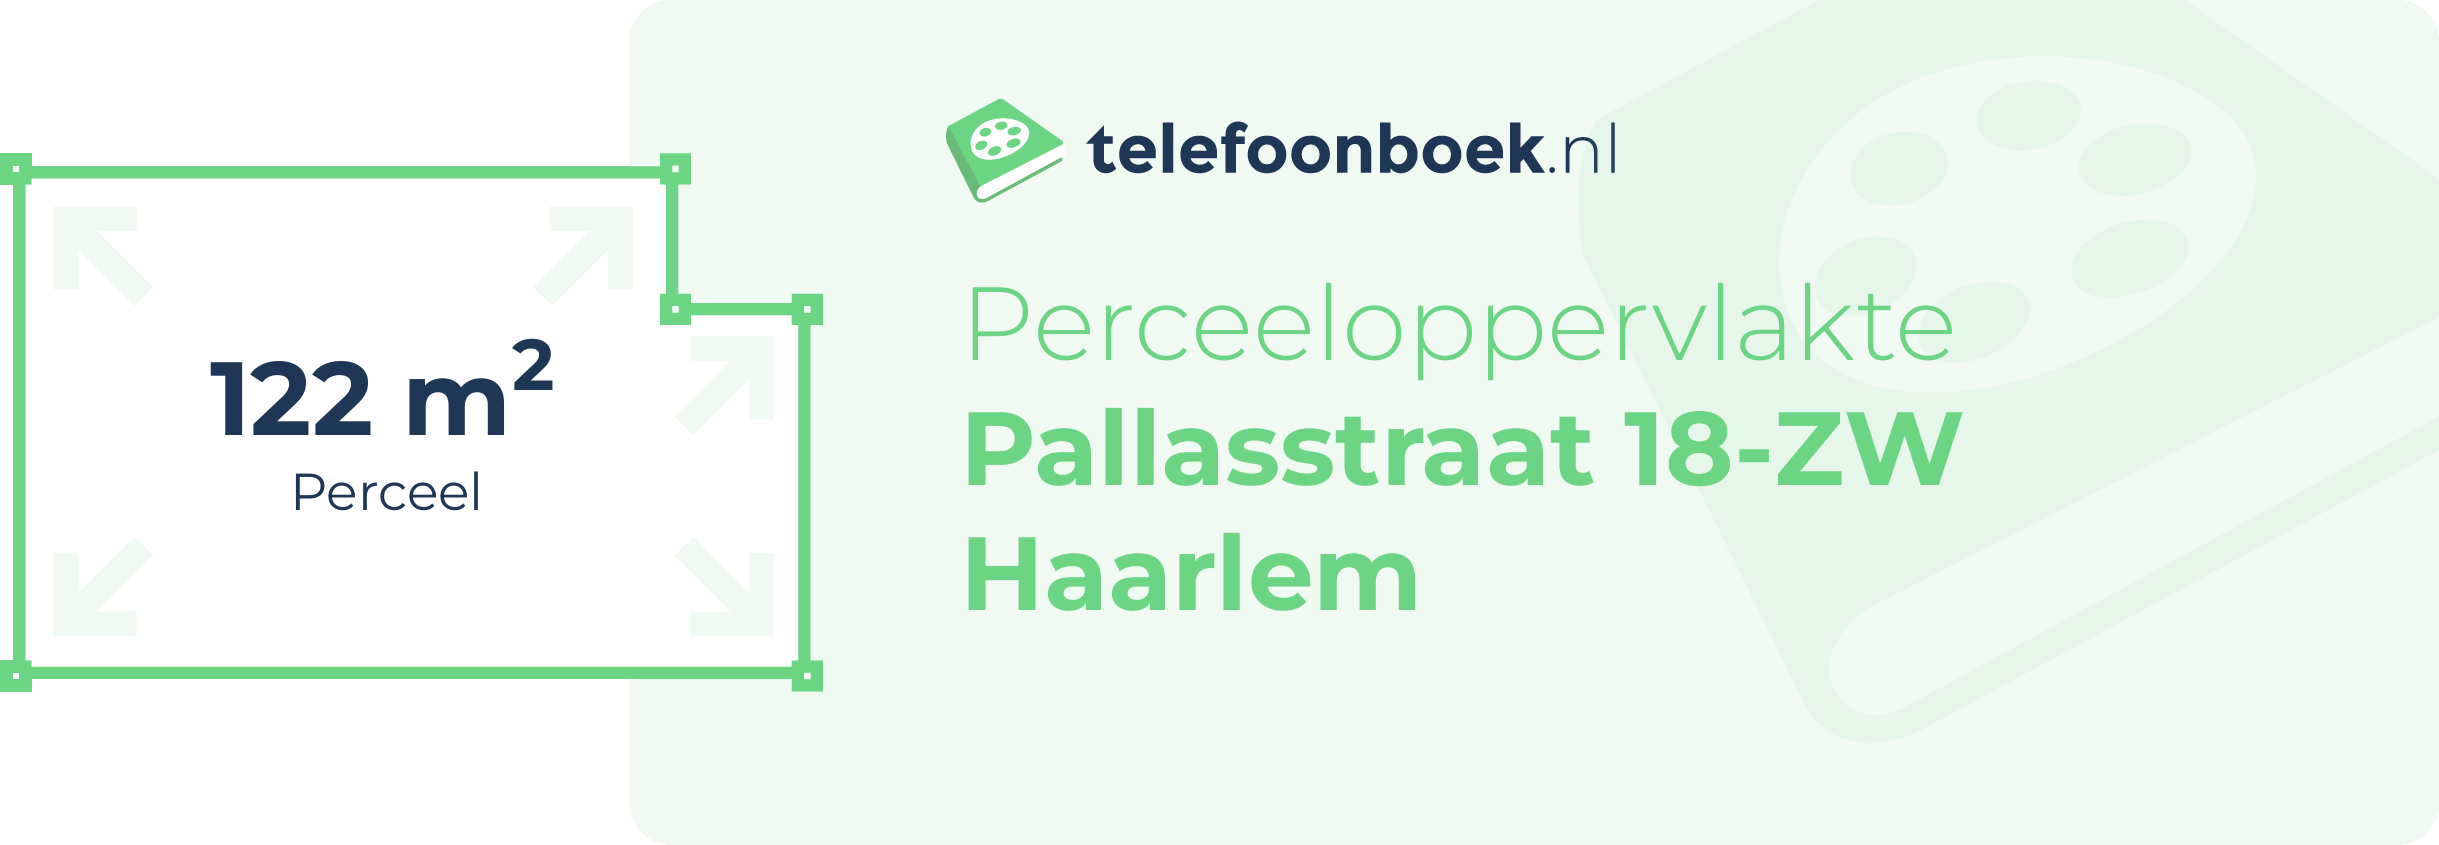 Perceeloppervlakte Pallasstraat 18-ZW Haarlem